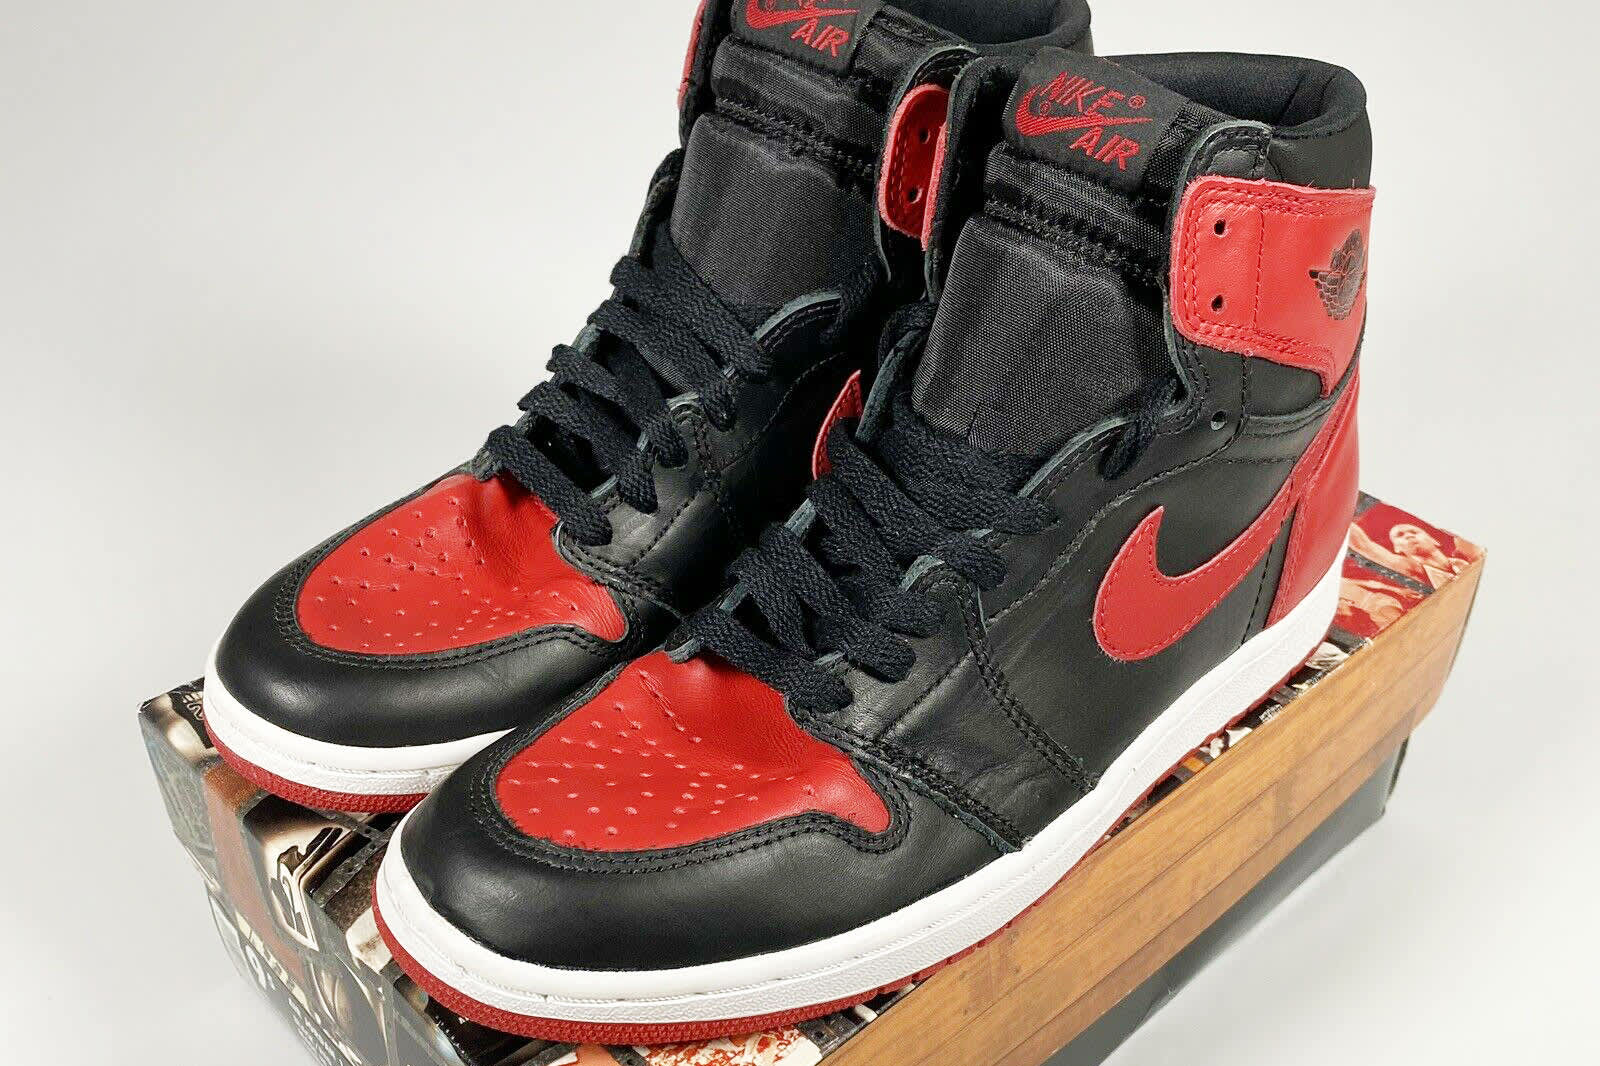 sneakers on ebay